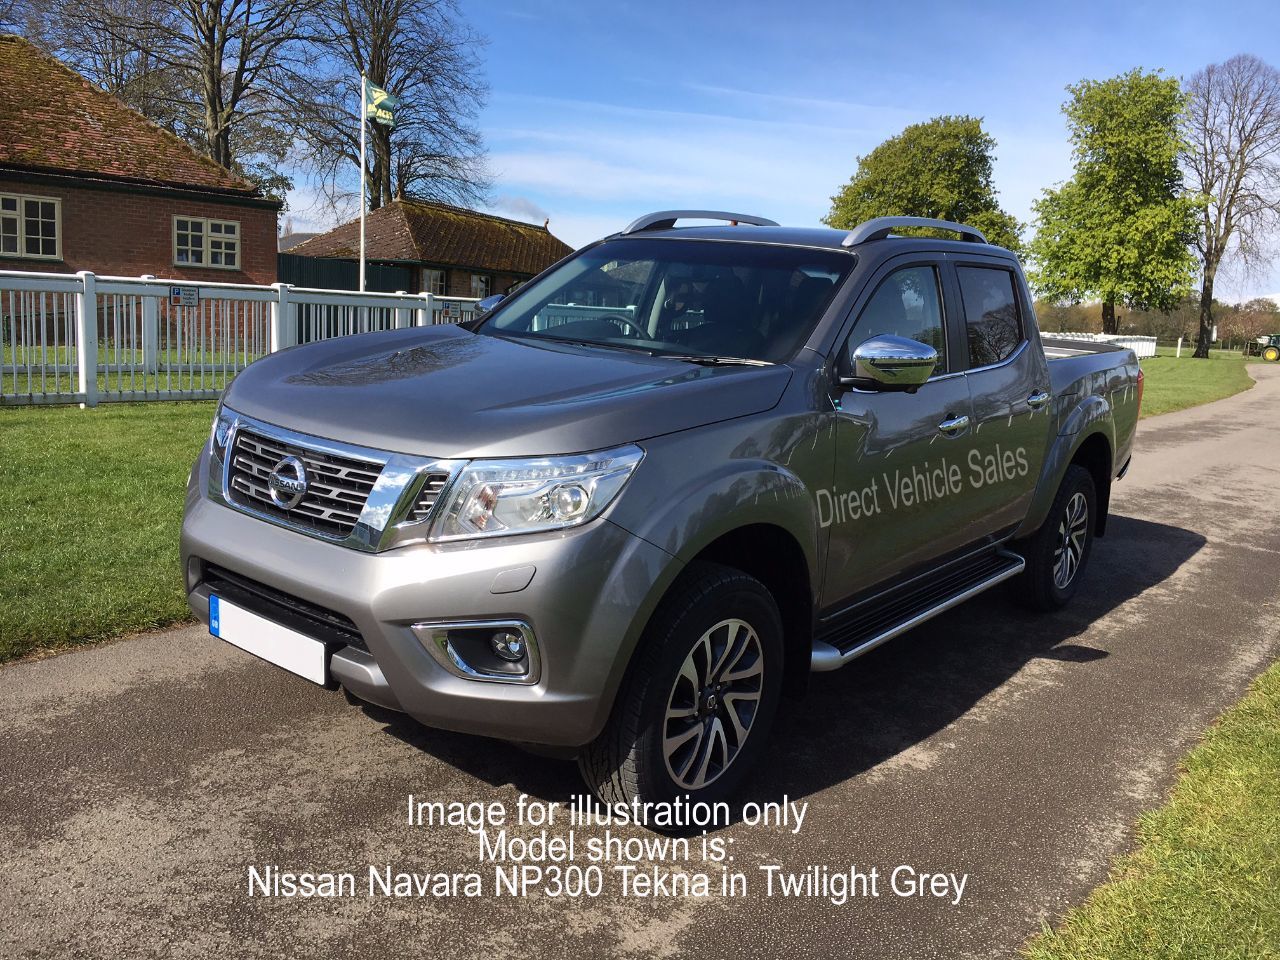 Nissan navara dealers in yorkshire #5